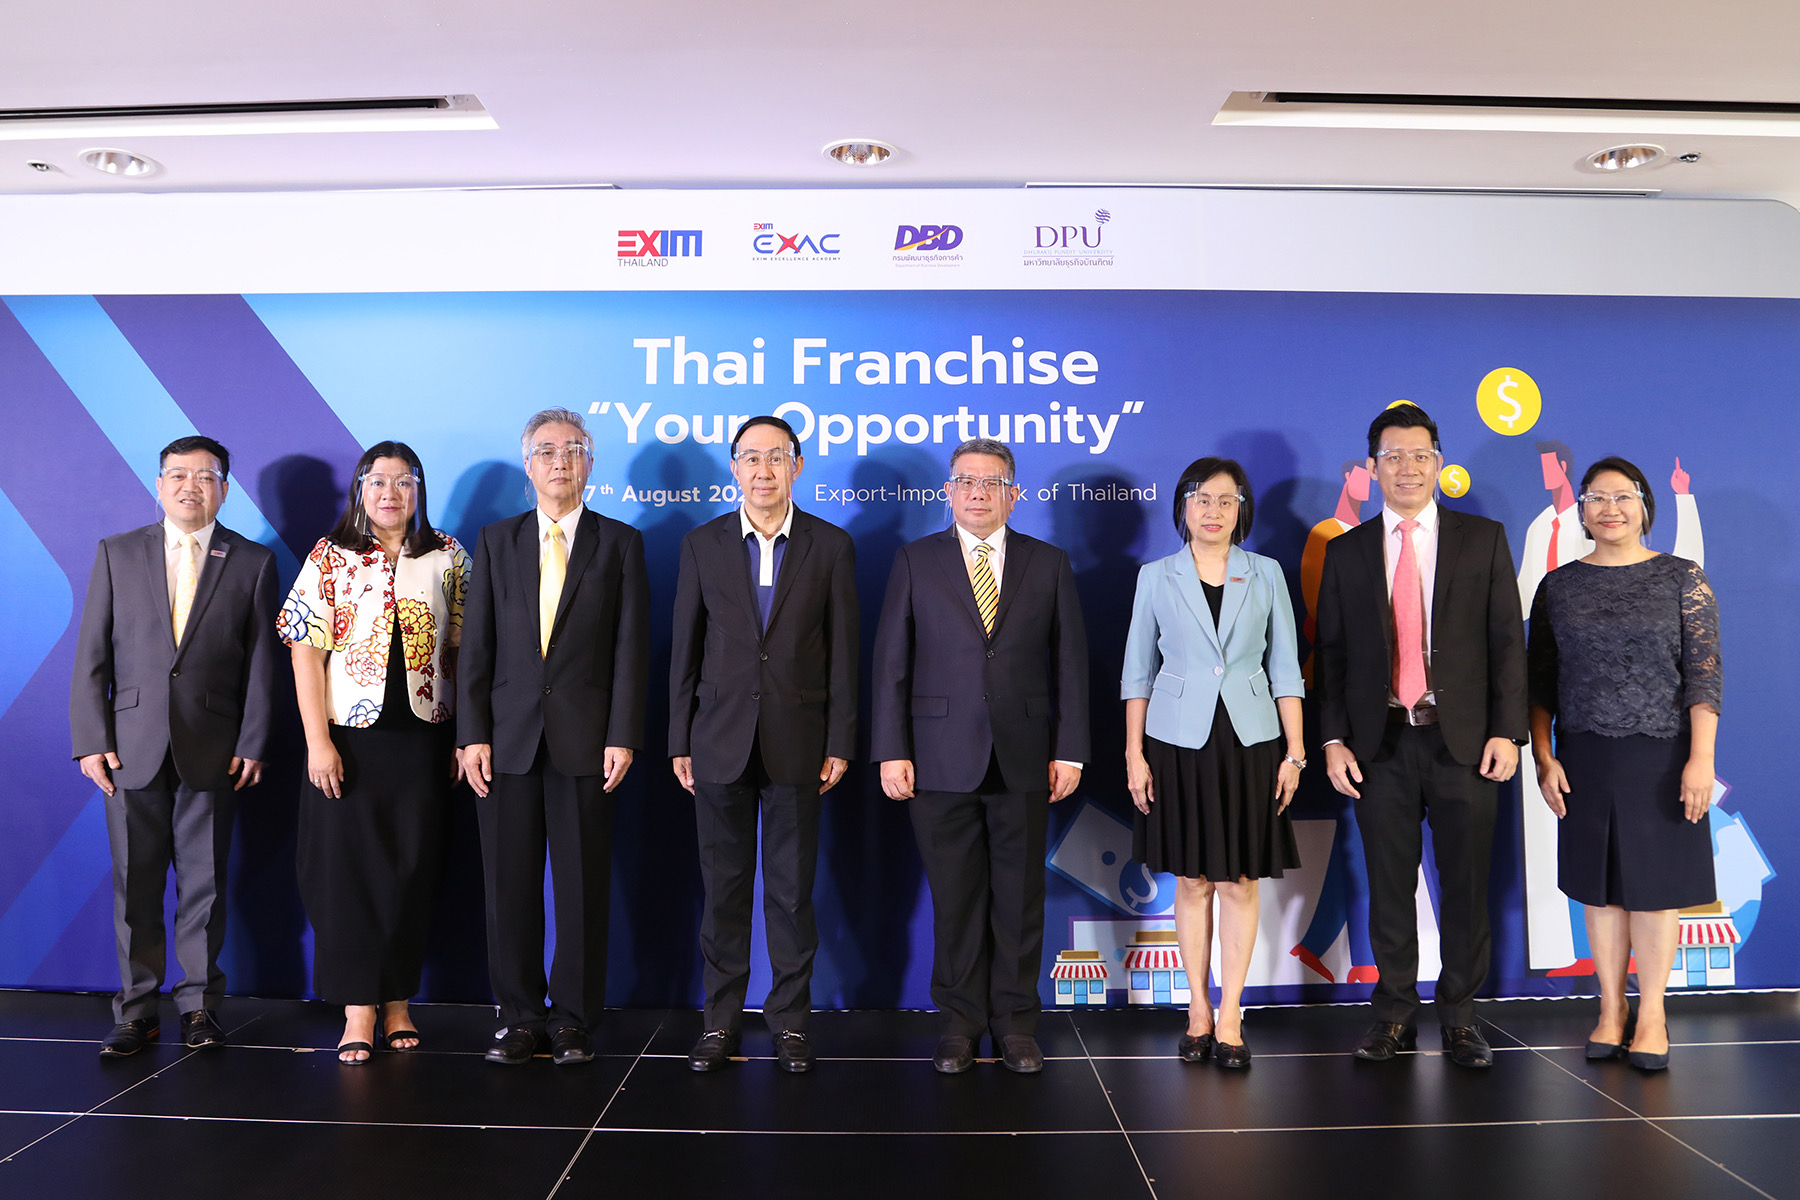 EXIM BANK จัดงานสัมมนาออนไลน์ส่งเสริมนักธุรกิจ CLMV ลงทุนในธุรกิจแฟรนไชส์ไทย